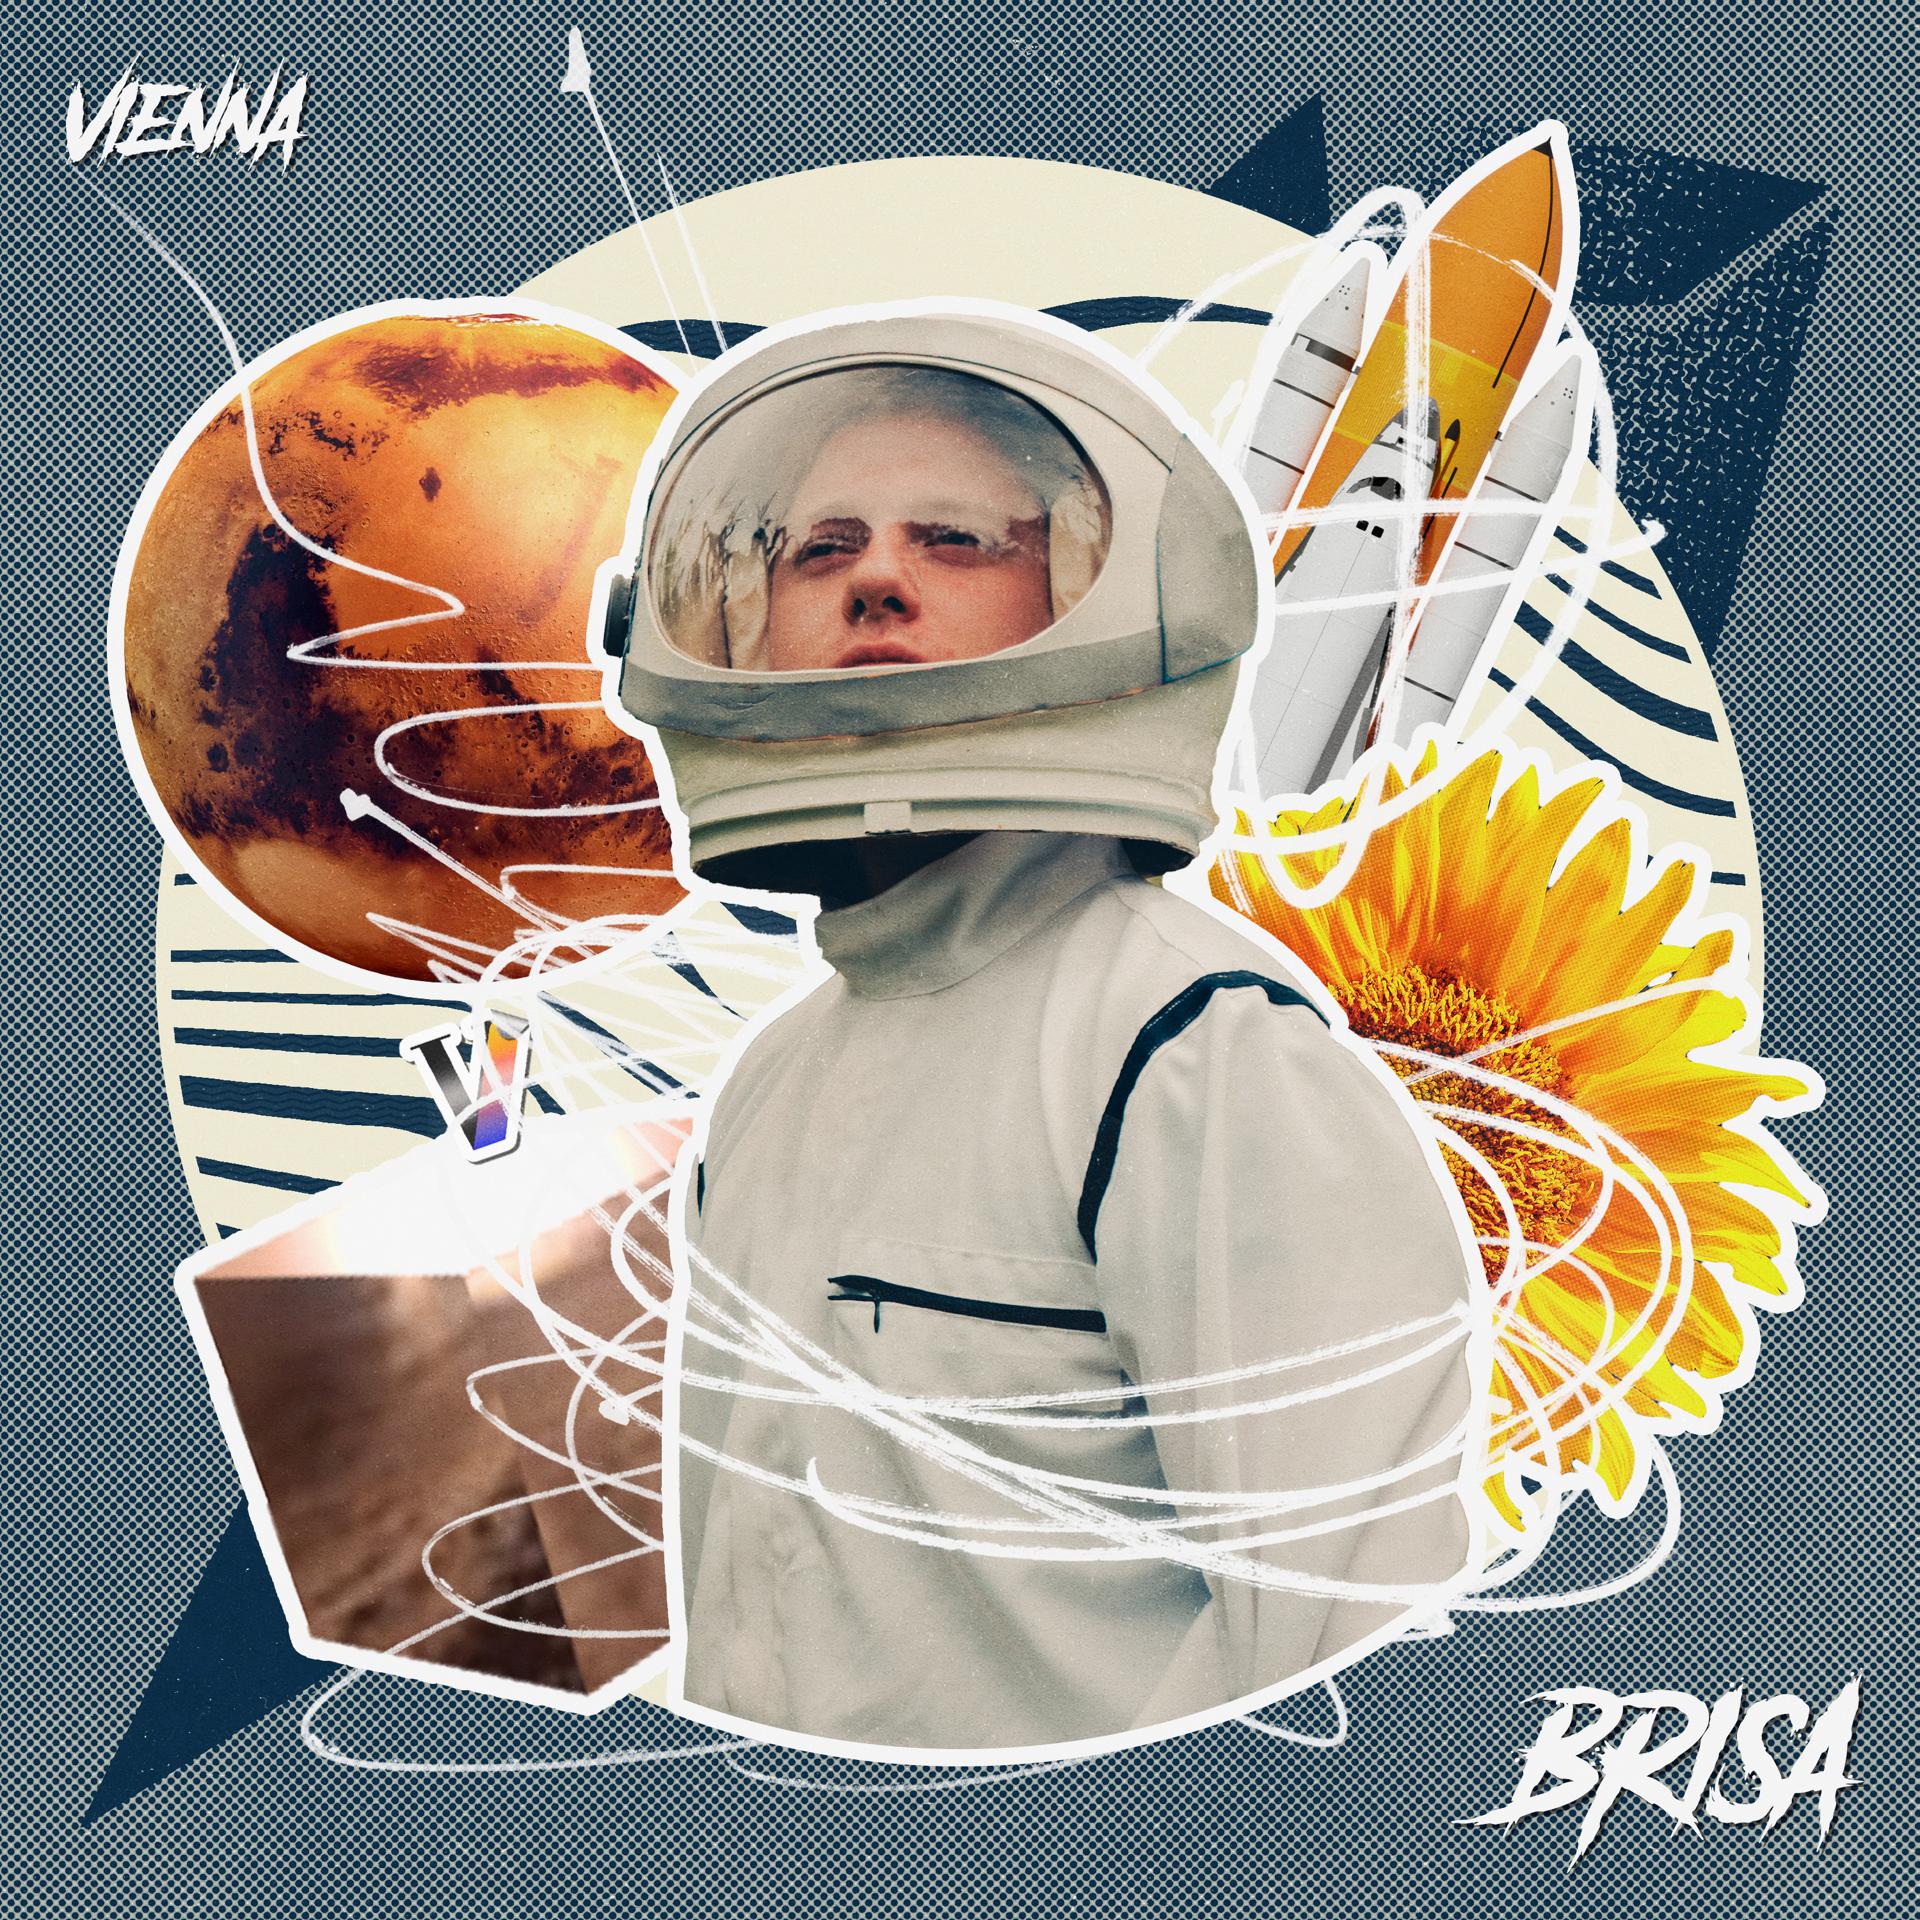 Постер альбома Brisa